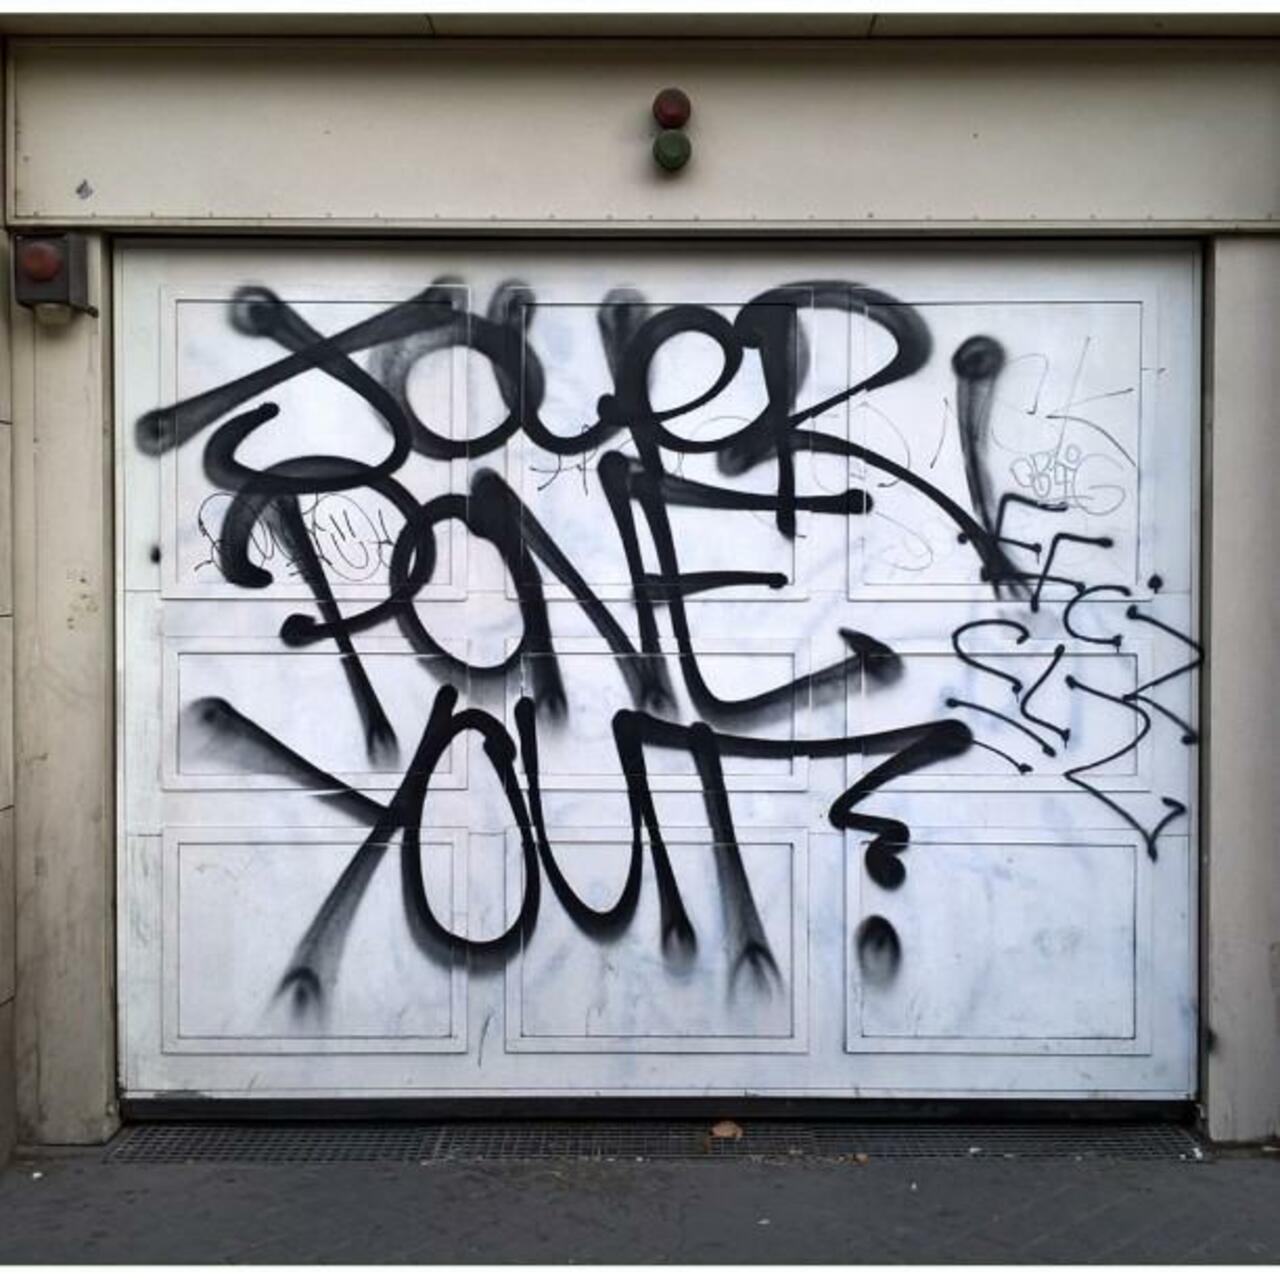 #Paris #graffiti photo by @maxdimontemarciano http://ift.tt/1Qexu6p #StreetArt http://t.co/khkY9vlpri